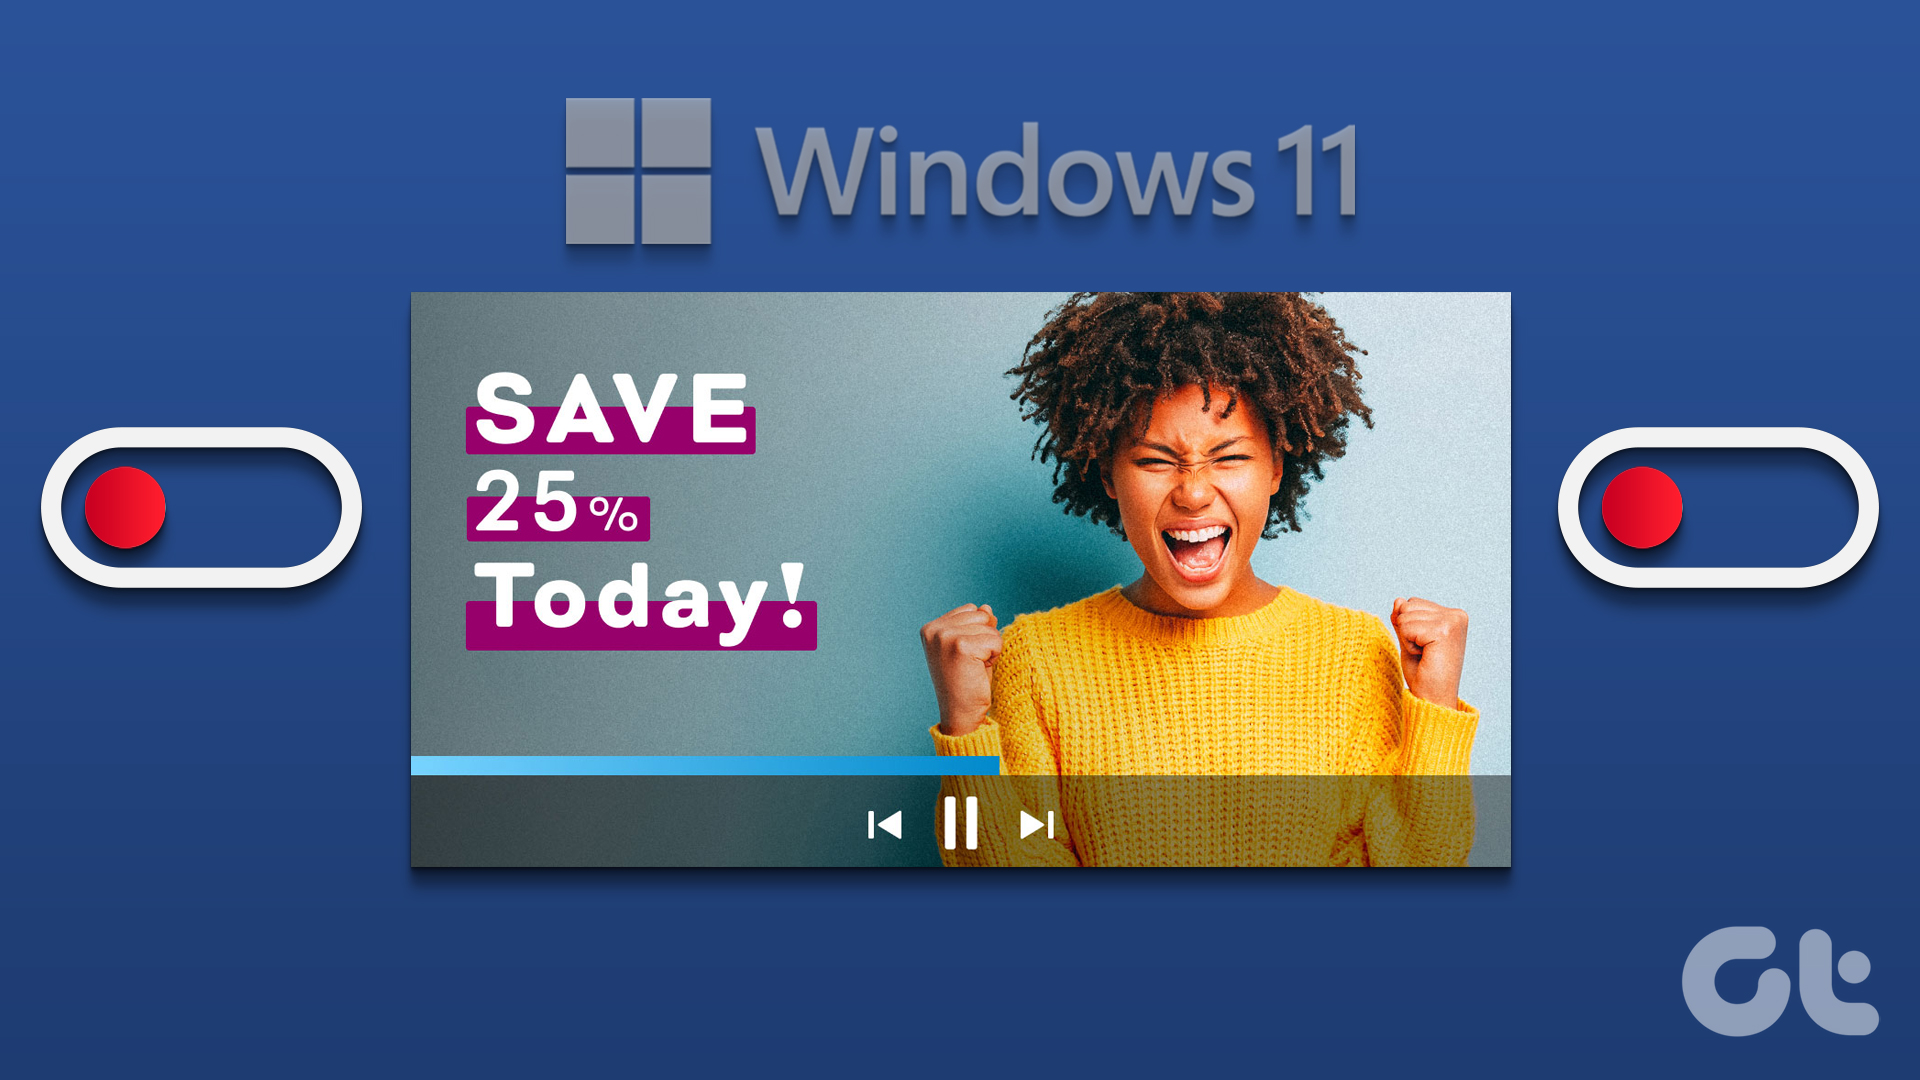 Remove Windows 11 ads